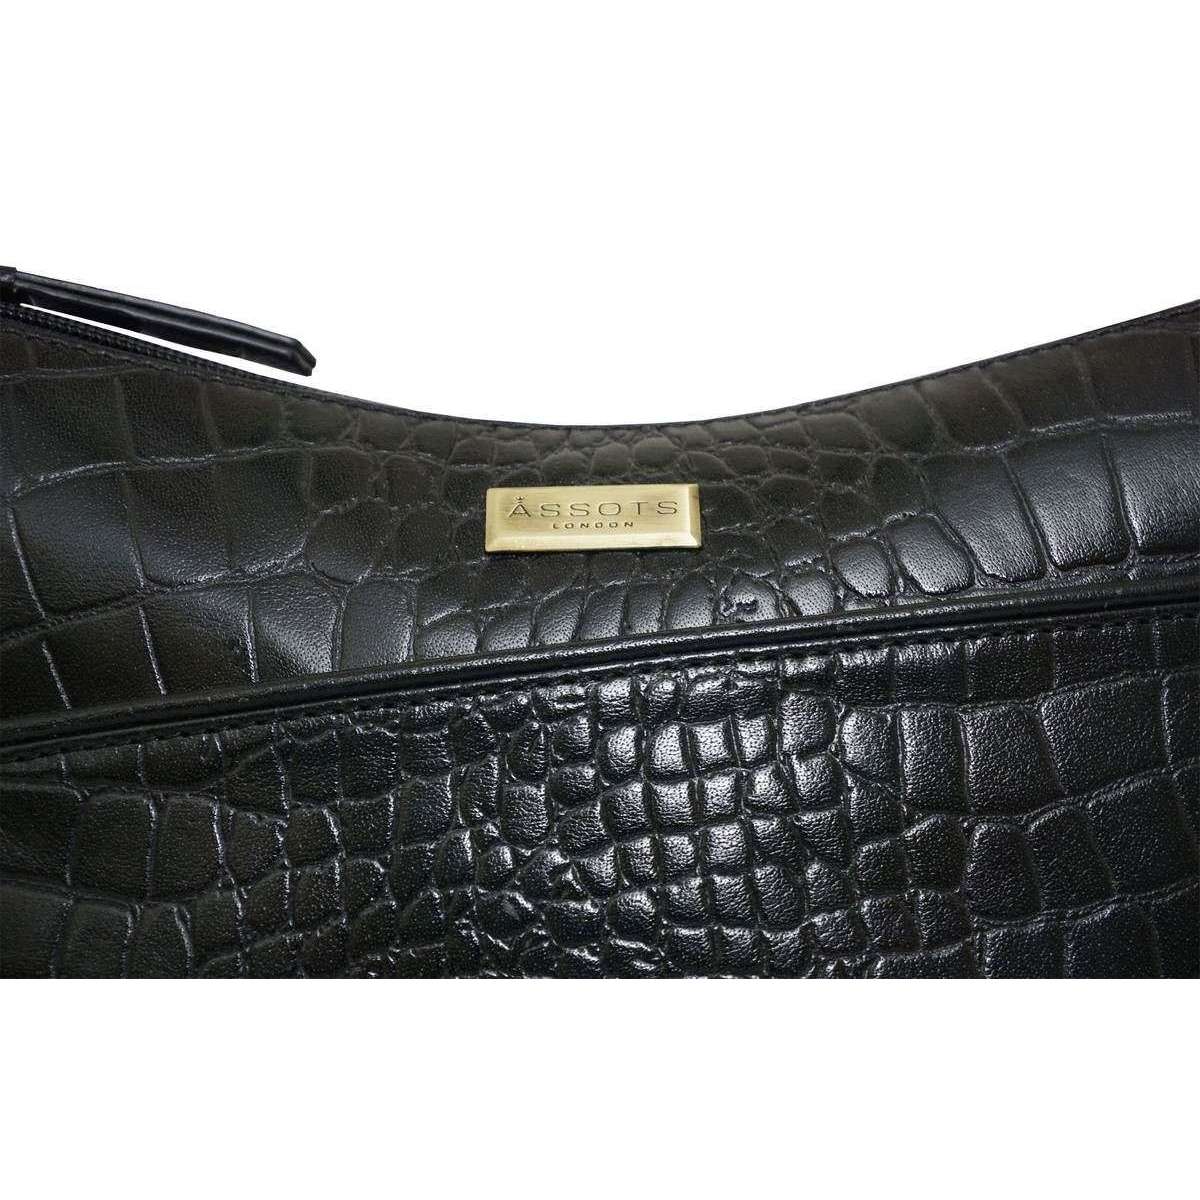 Assots London Womens Barbara Leather Tote Bag - Black